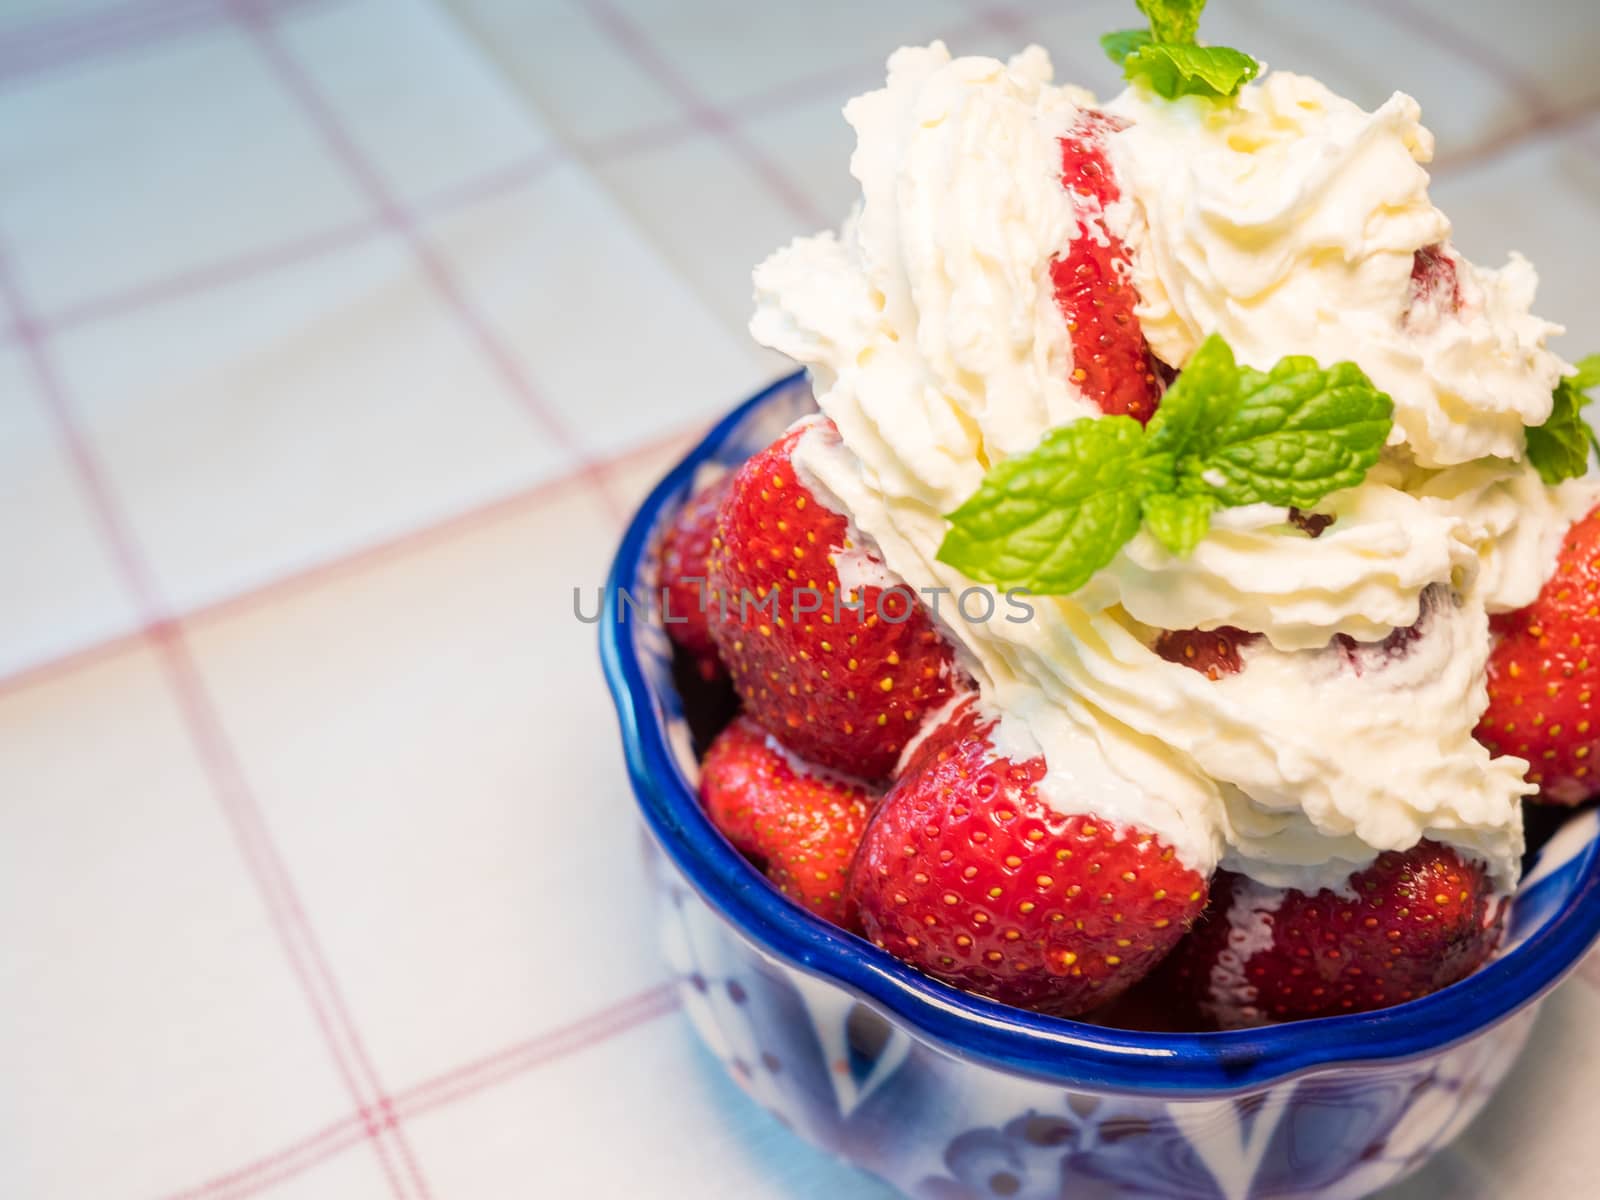 Strawberry wuth whipped cream by dolfinvik